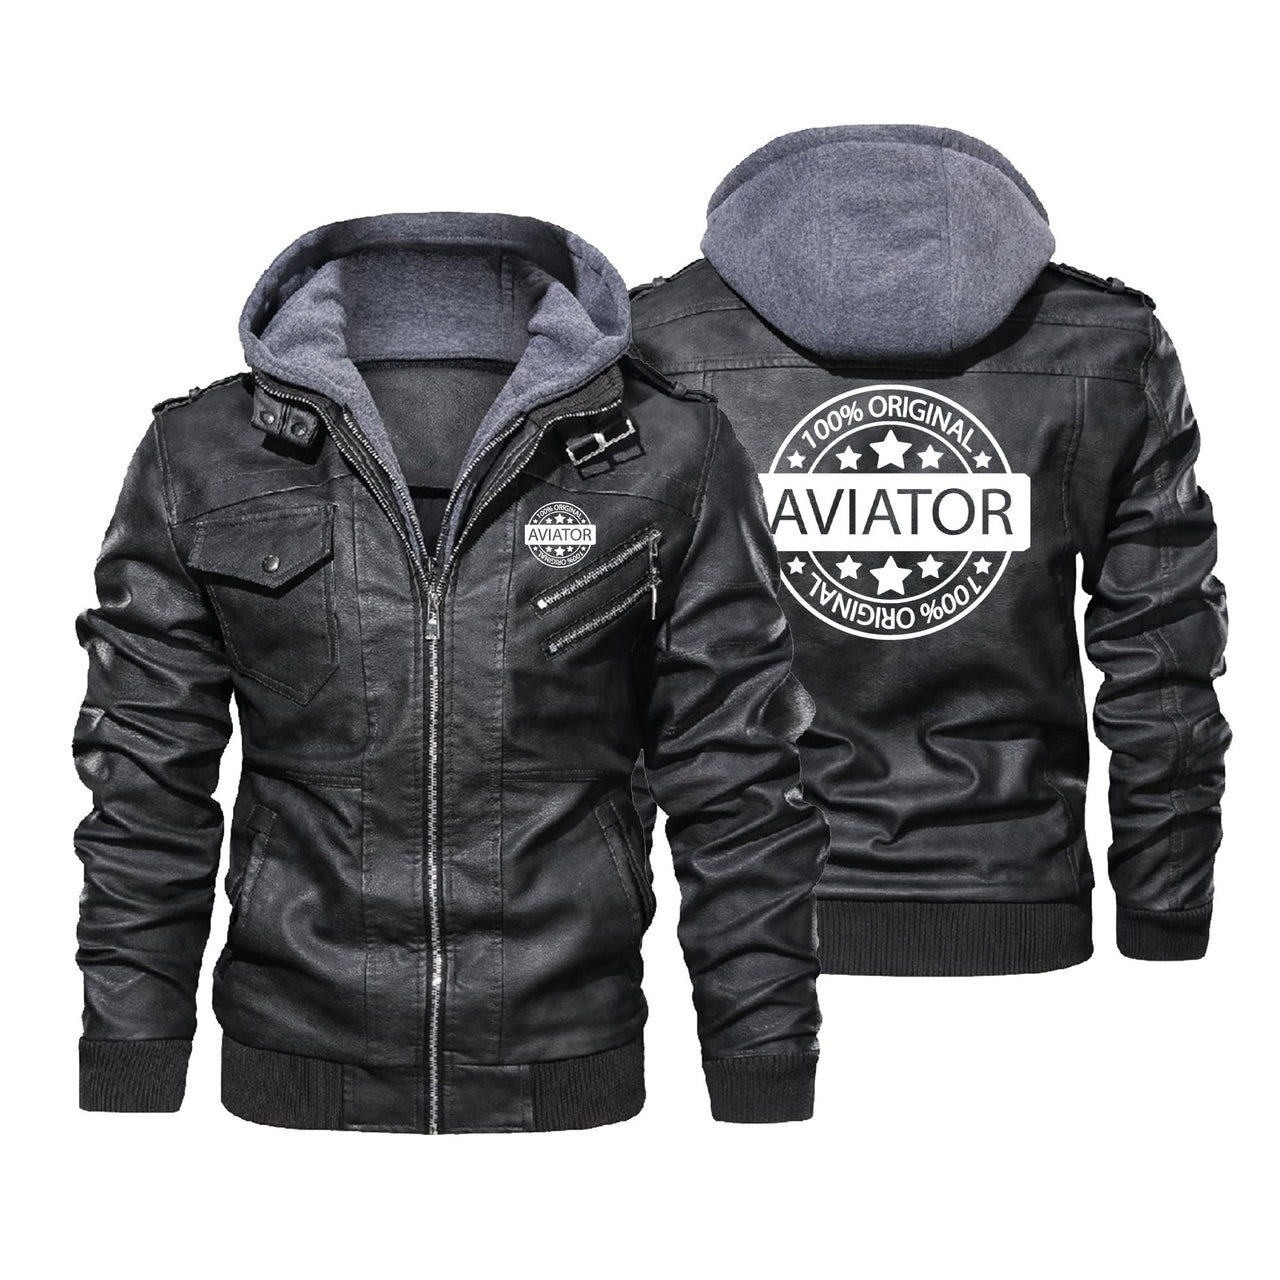 100 Original Aviator Designed Hooded Leather Jackets